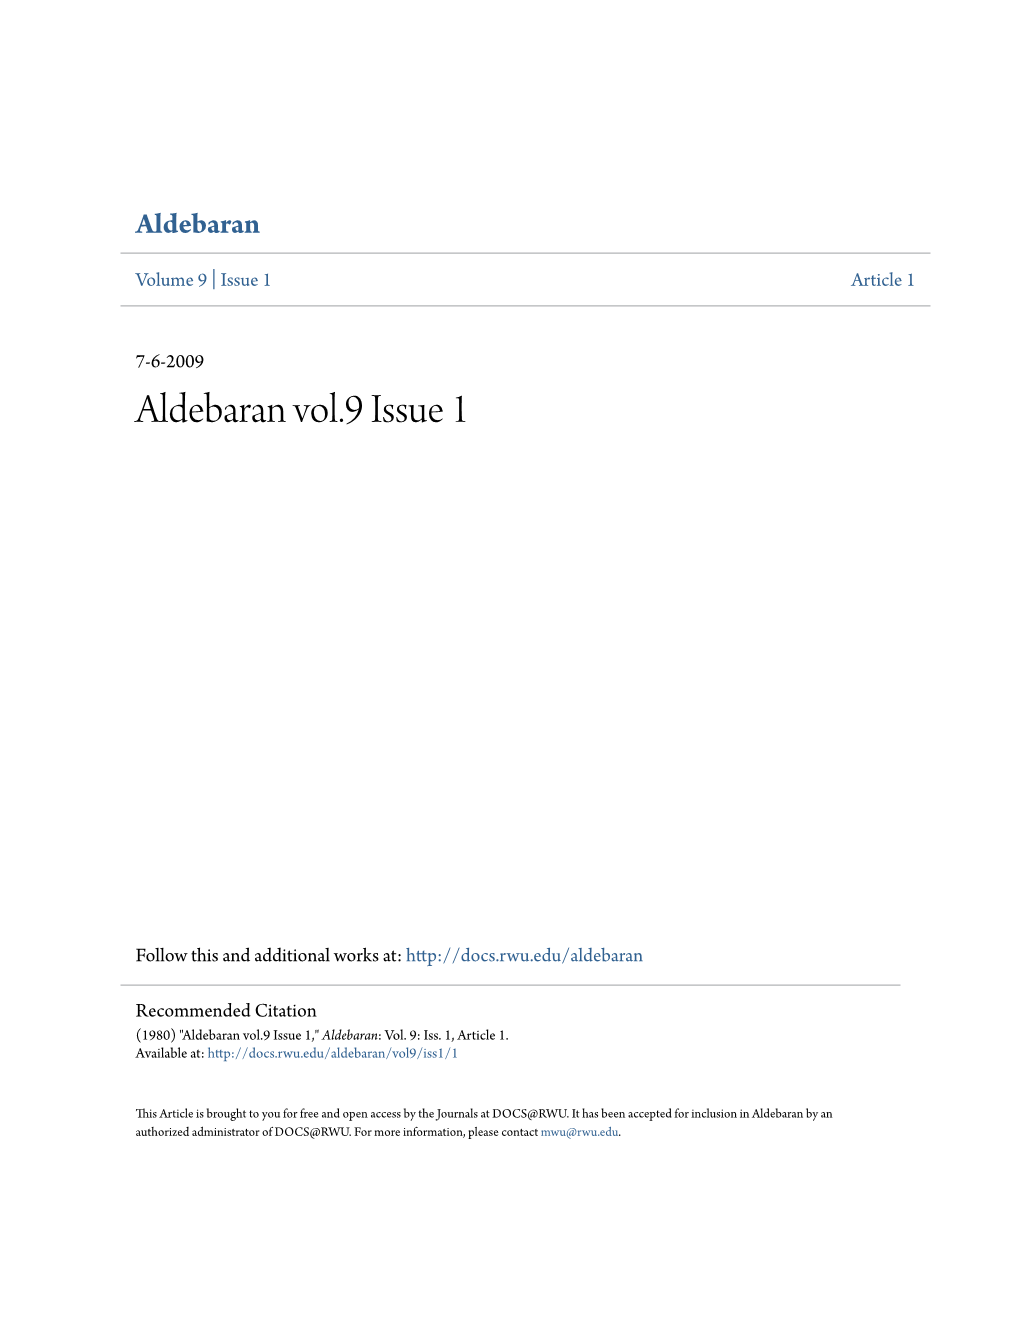 Aldebaran Vol.9 Issue 1